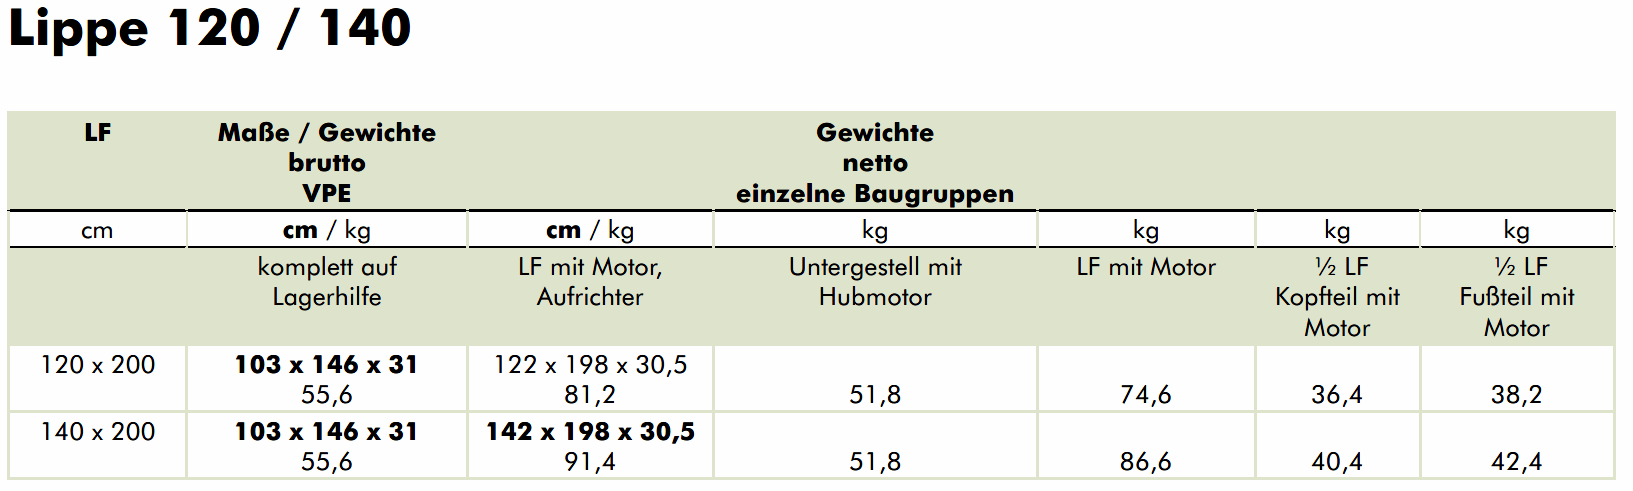 Transportmasse-und-Gewicht-des-Lippe-Einlegerahmen-Lippe-120-140-x-200-cm587e1e1b3e70f